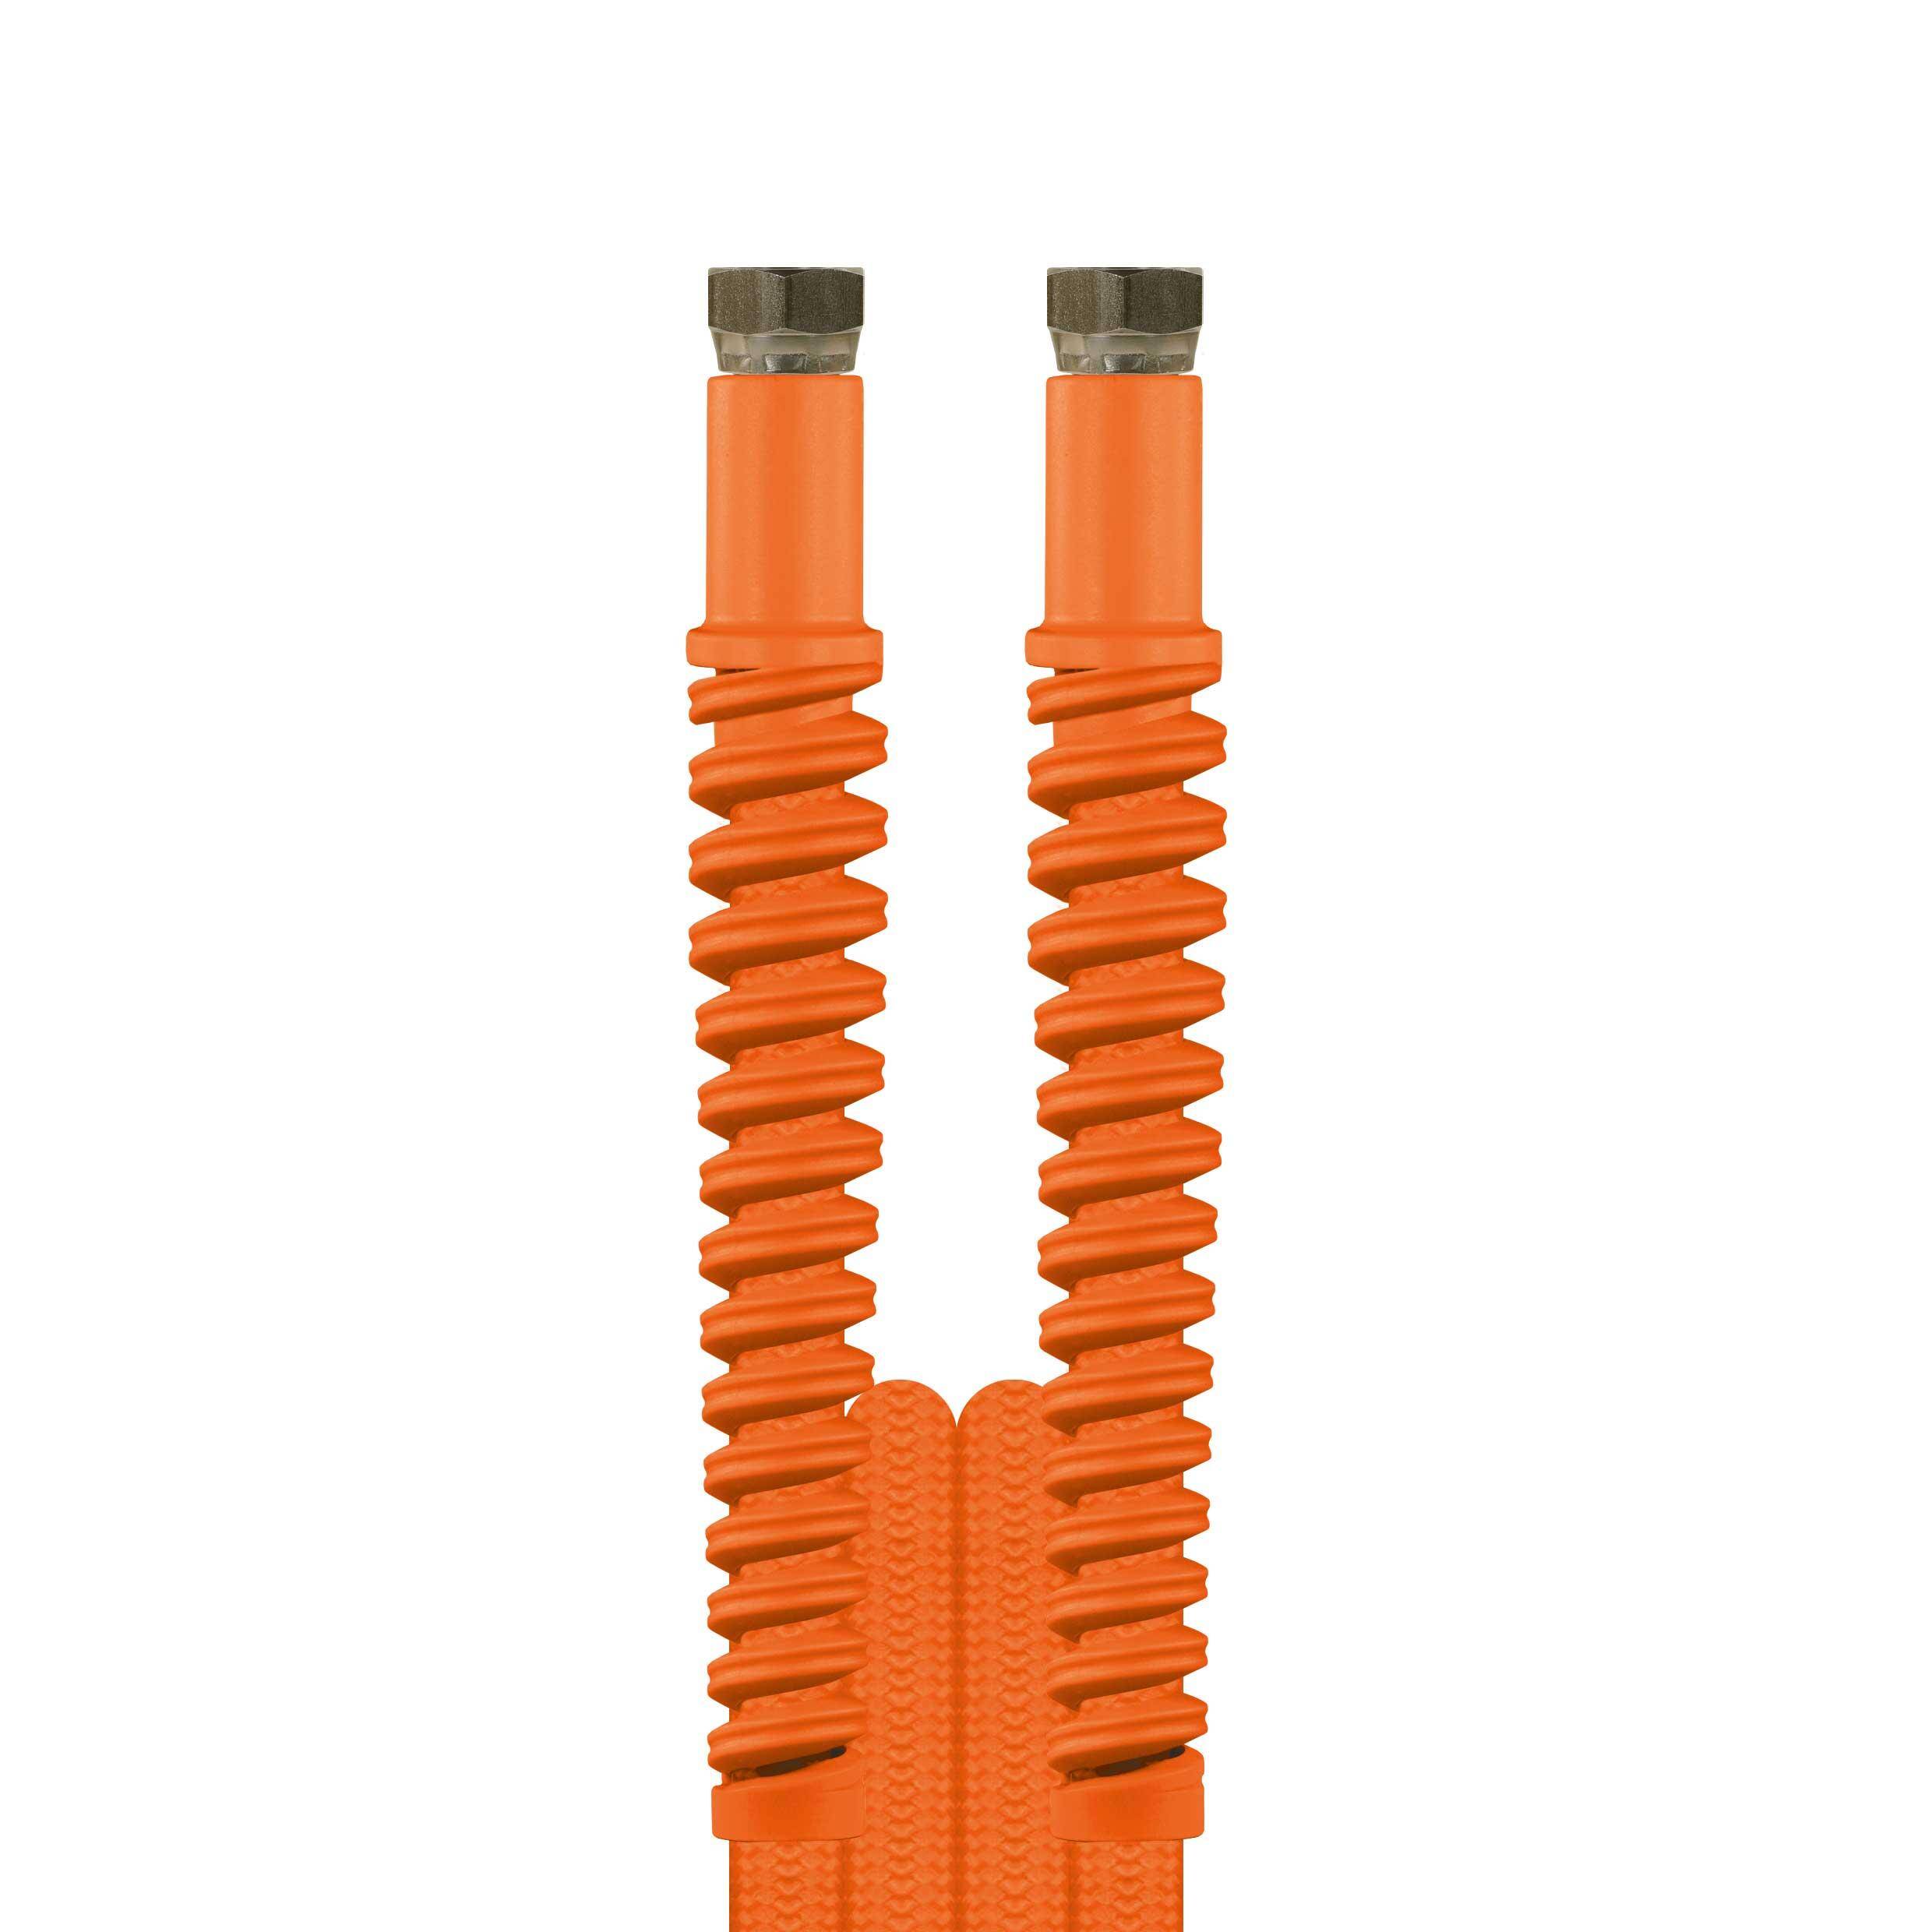 Wąż CARWASH-COMFORT orange 4,0 mb okuty